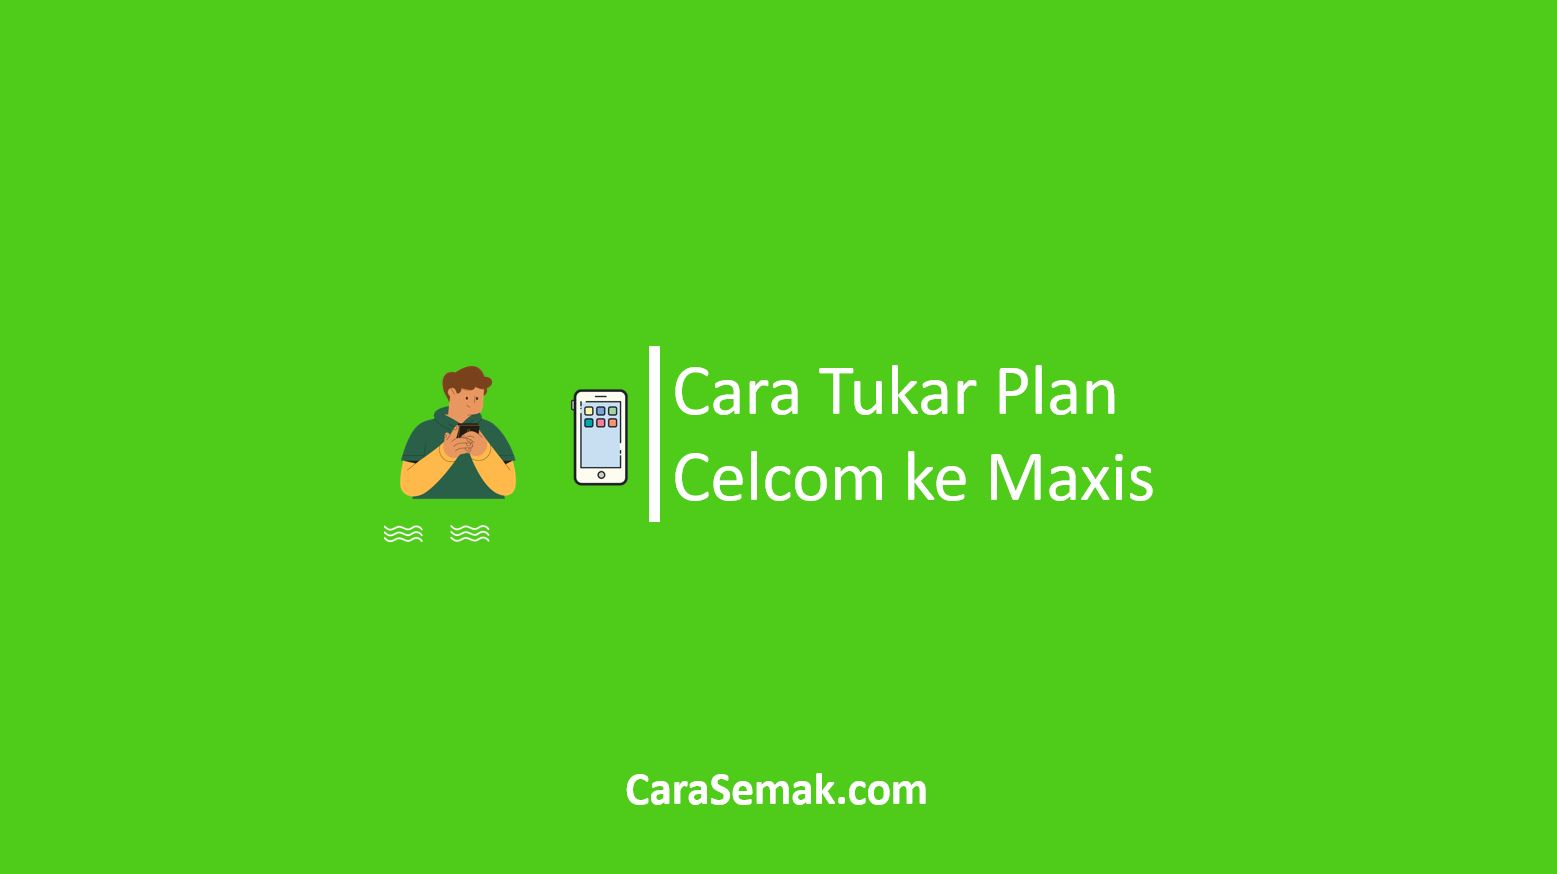 Cara Tukar Plan Celcom ke Maxis